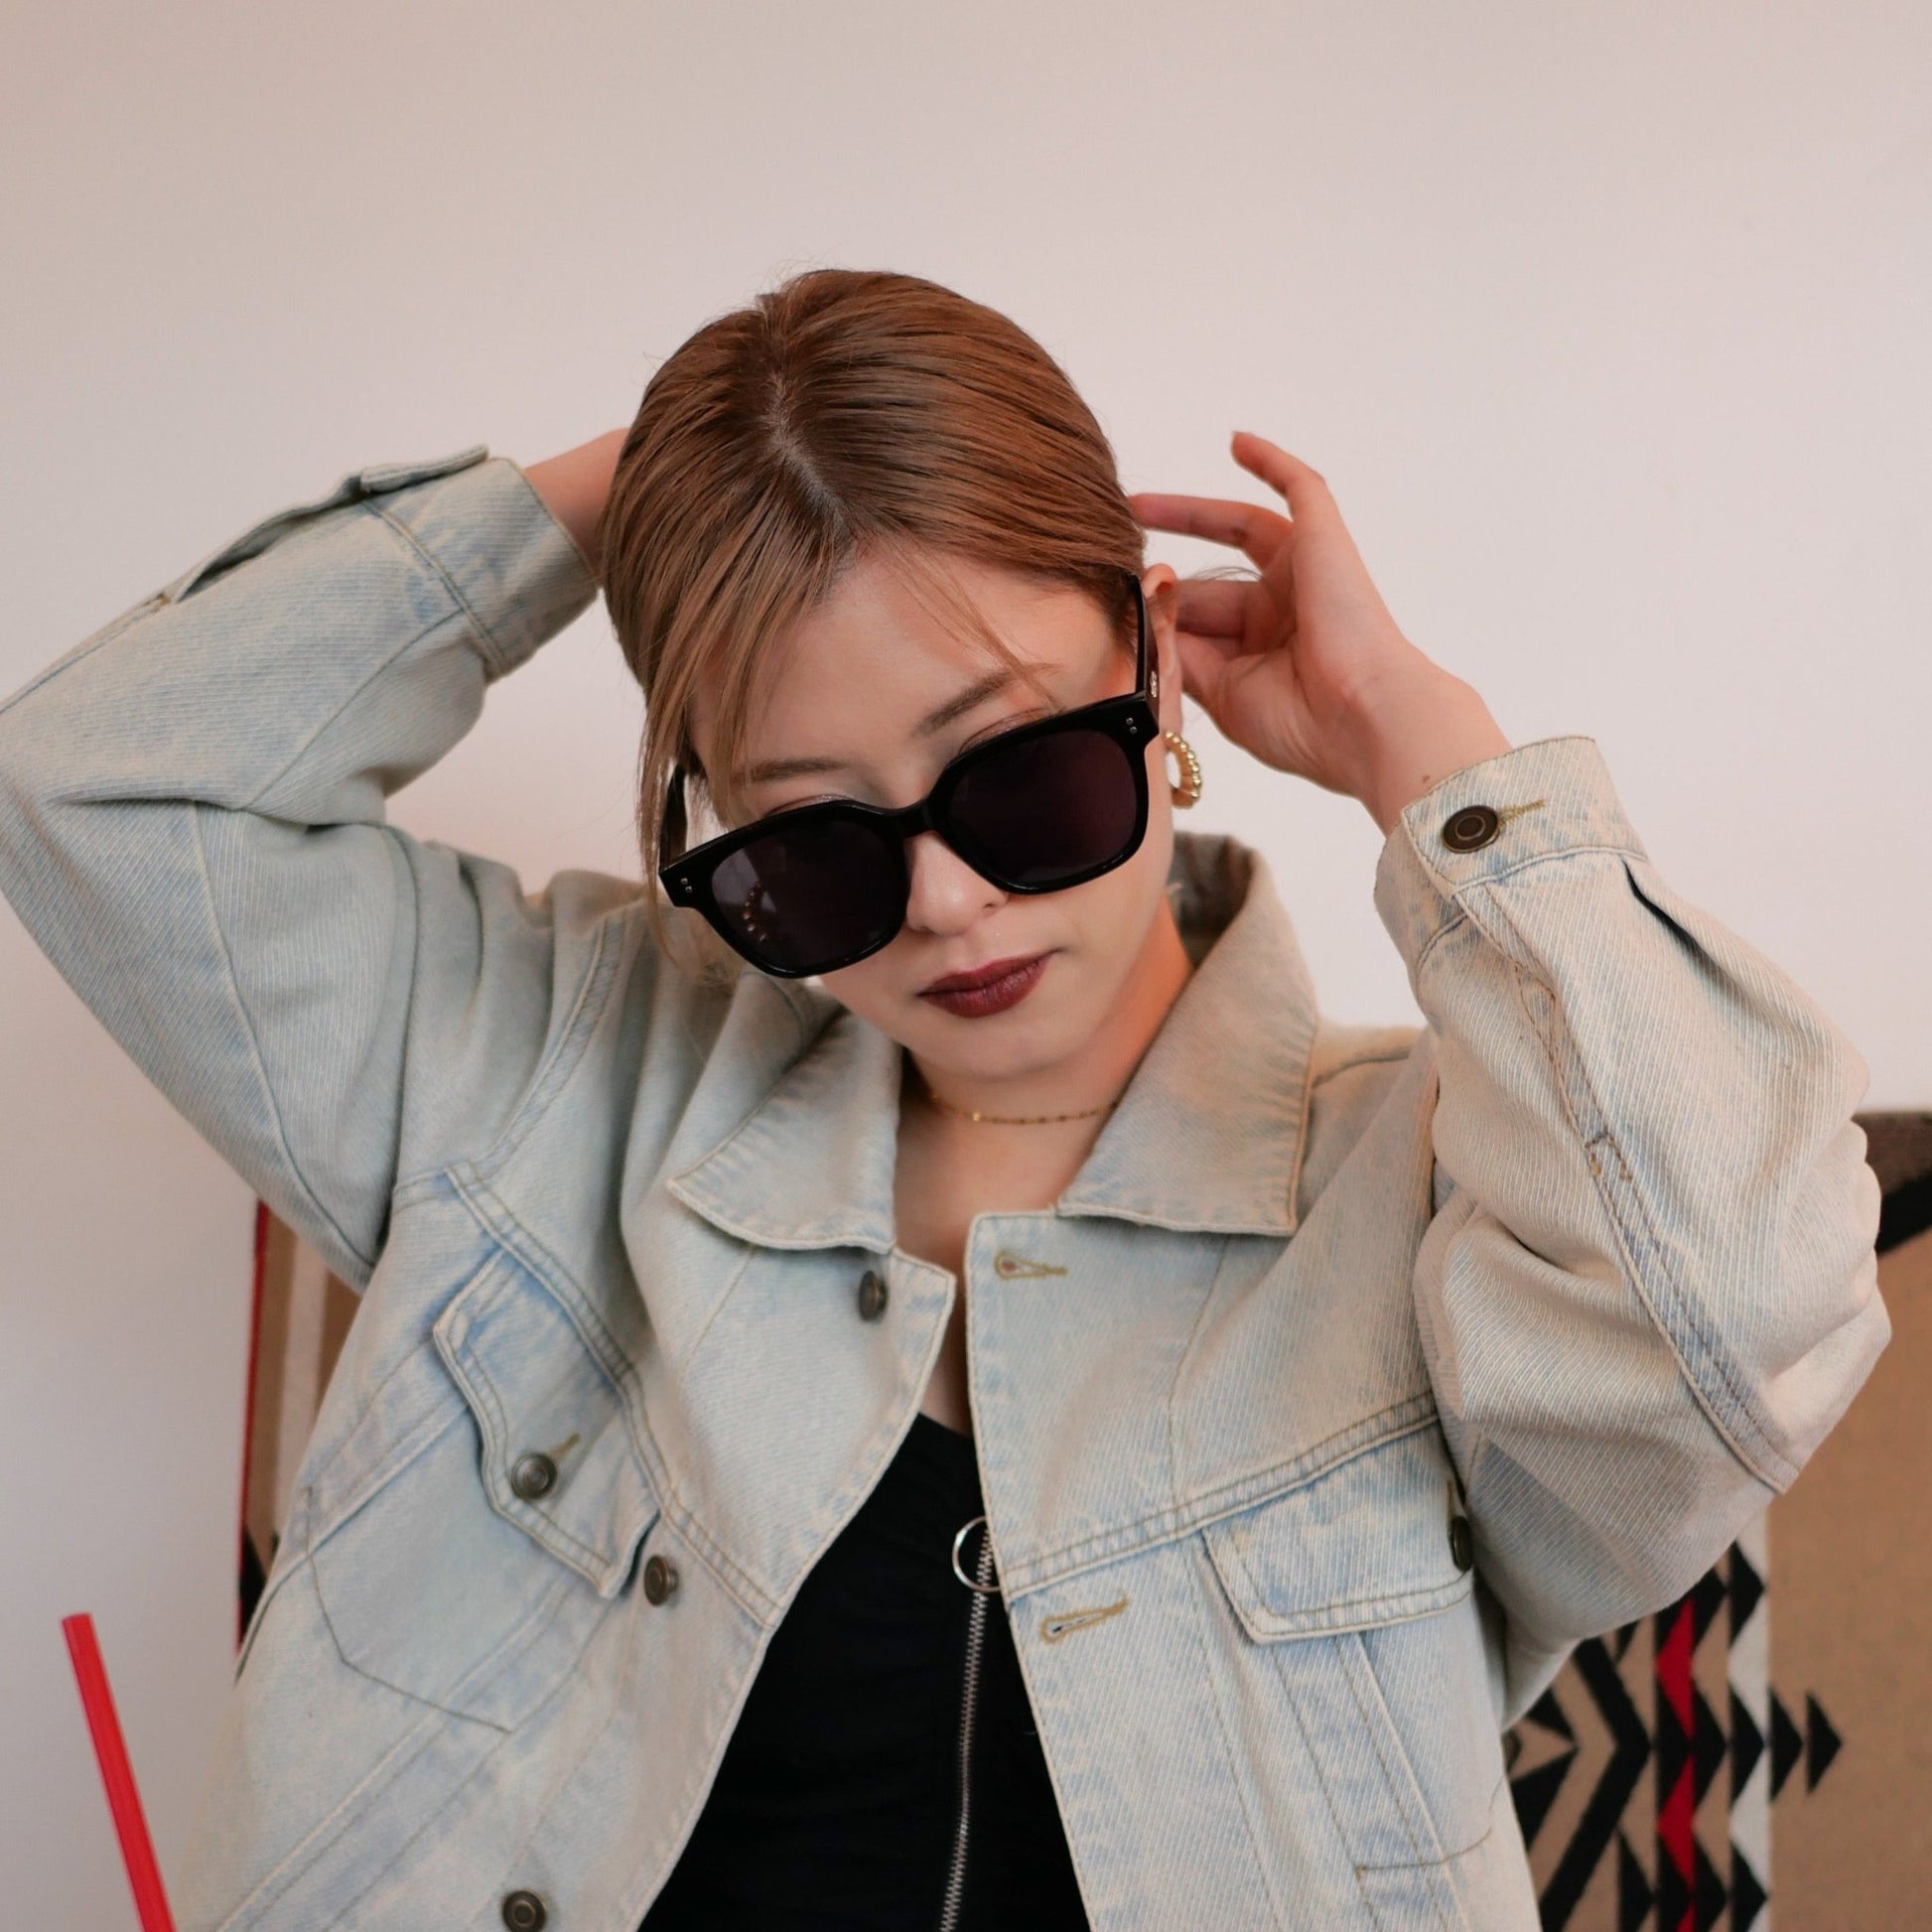 Wide sunglasses - 𝐇𝐨𝐧𝐞𝐲 𝐁𝐮𝐭𝐭𝐞𝐫 𝐍𝐢𝐧𝐞